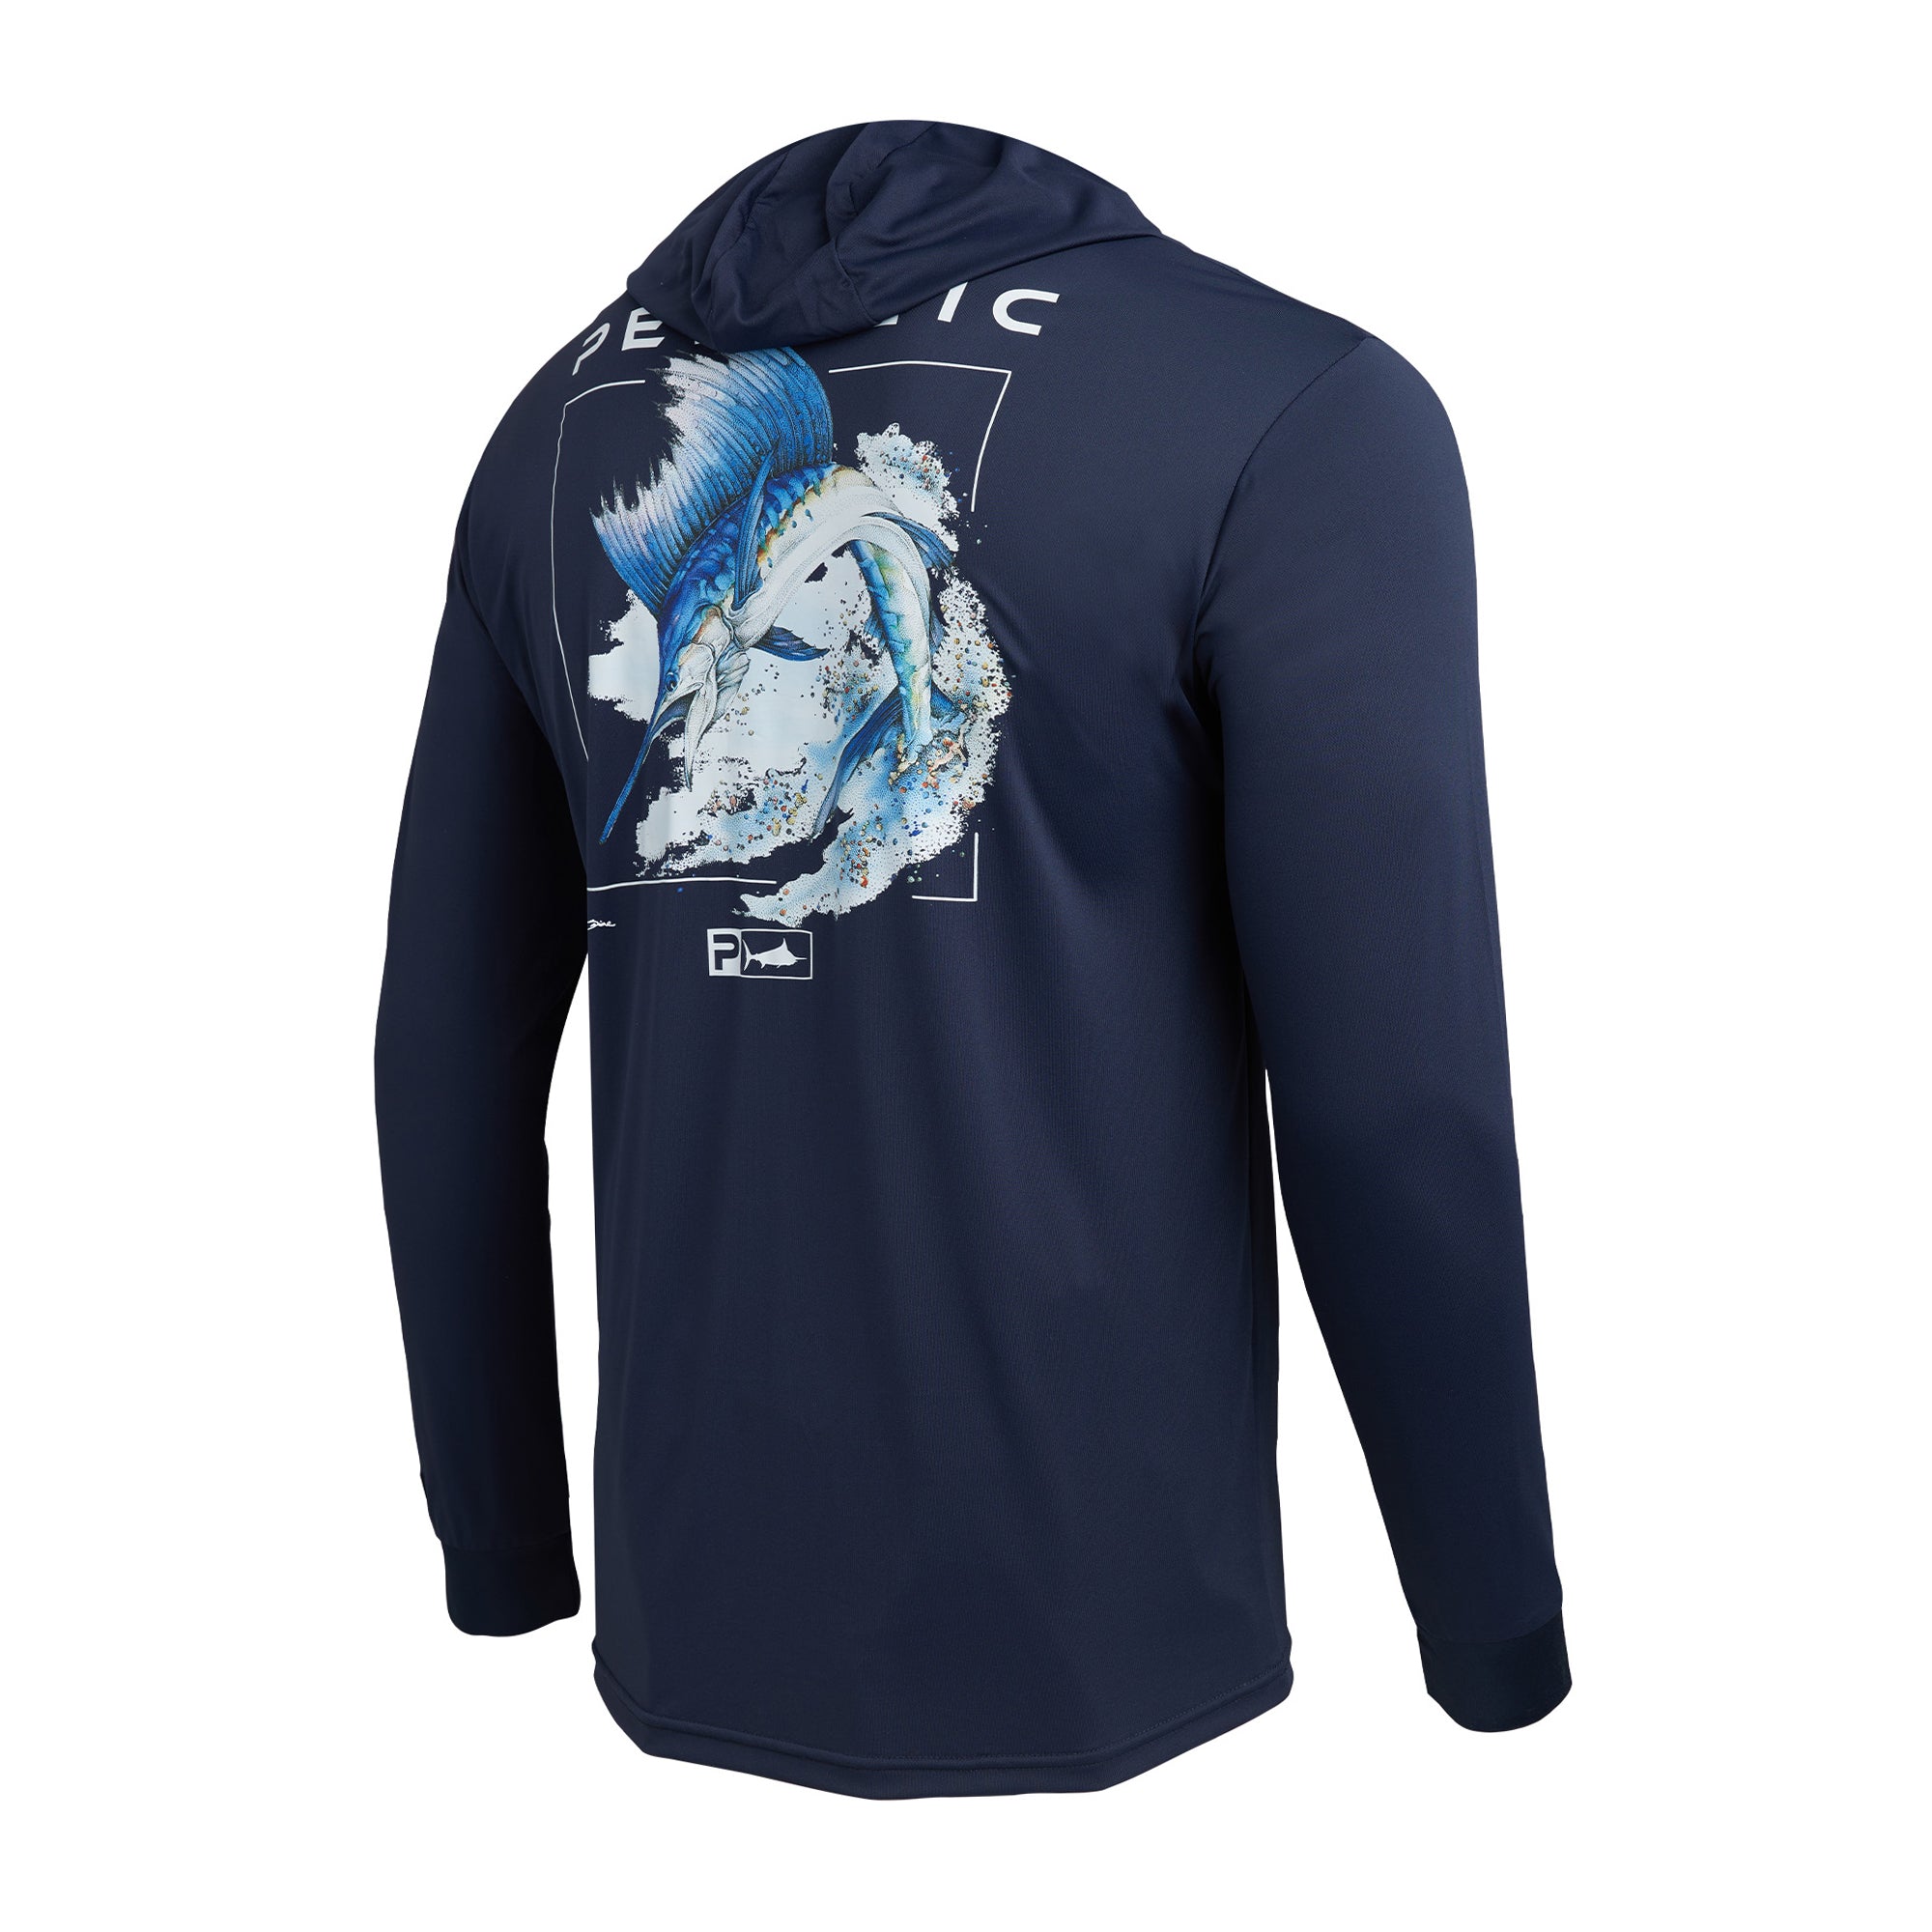 Aquatek Goione Sailfish Hooded Fishing Shirt